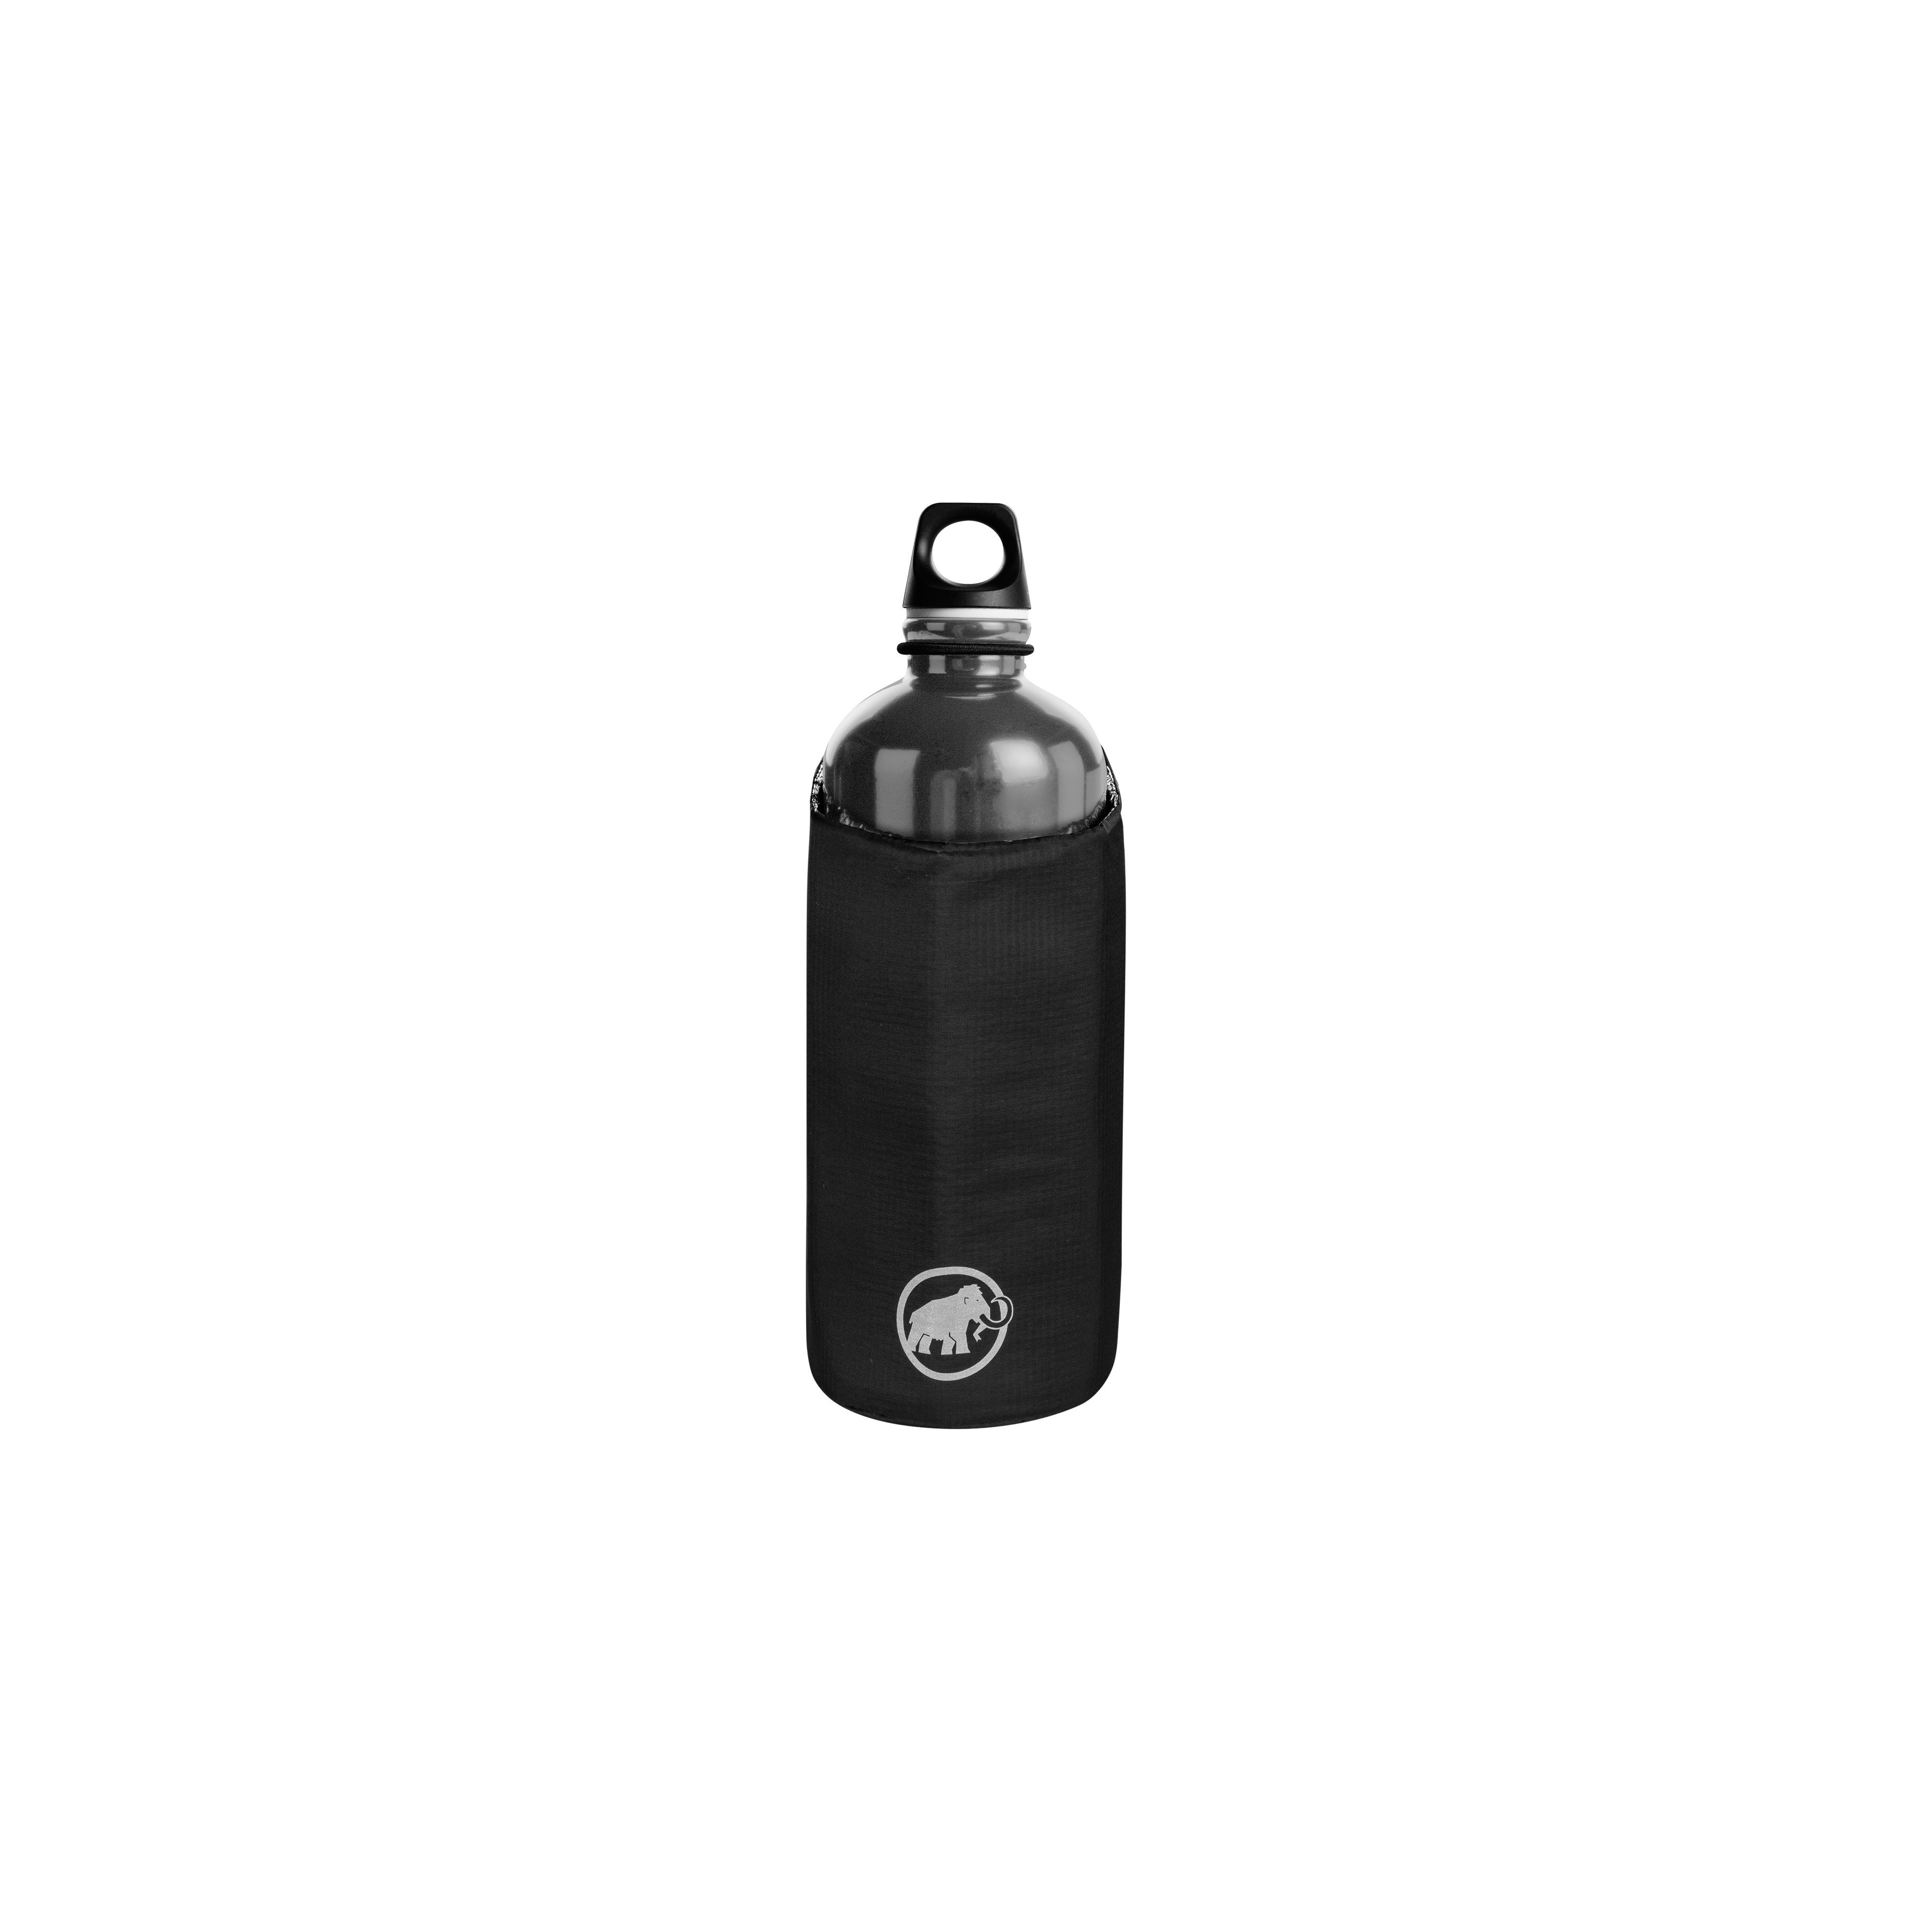 Add-on bottle holder insulated - black, S thumbnail